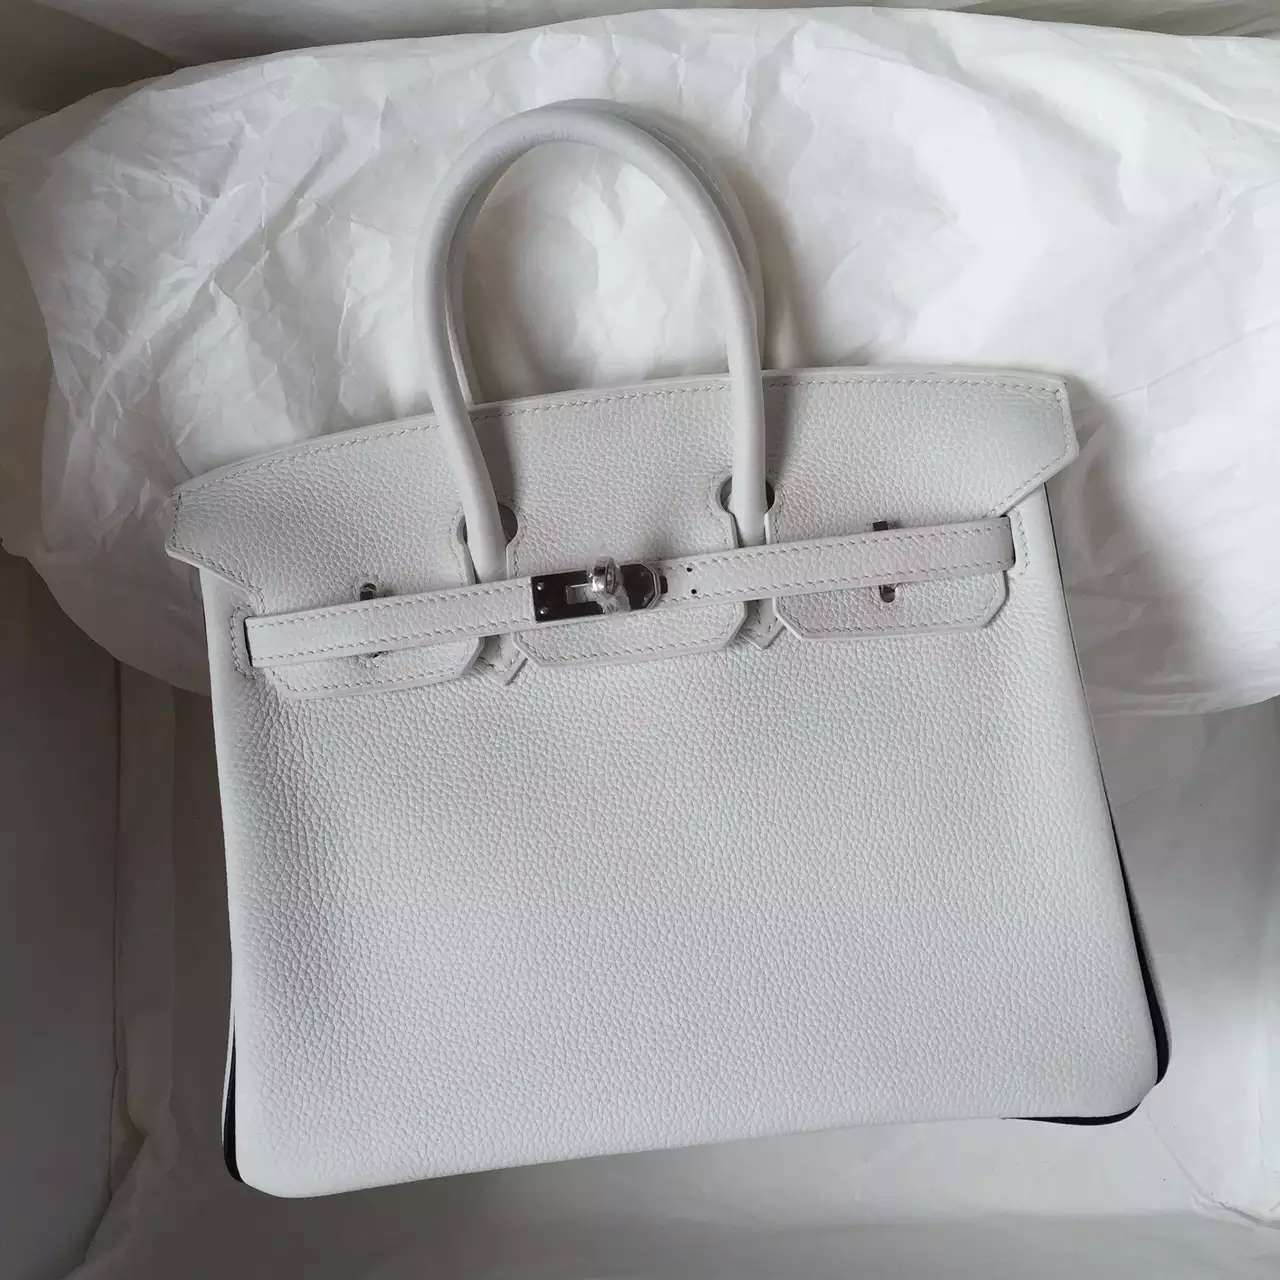 cheap birkin bags - Luxury Hermes Birkin Bag White \u0026amp; Black Two-tone Color Togo Leather ...